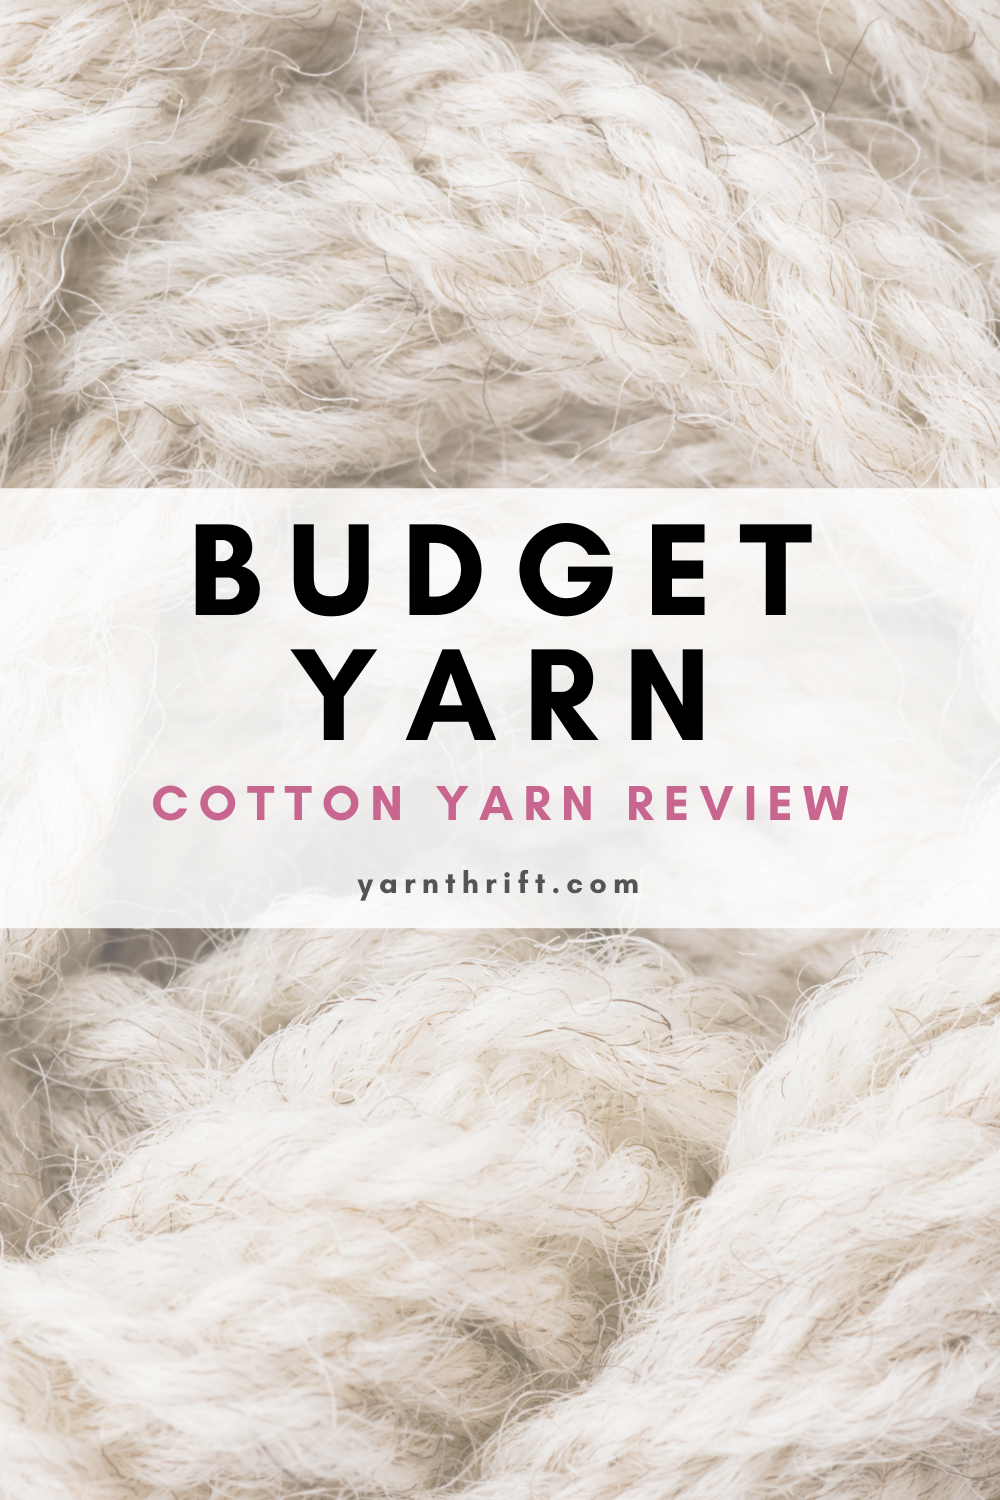 https://yarnthrift.com/wp-content/uploads/2022/04/budget-yarn-review.png